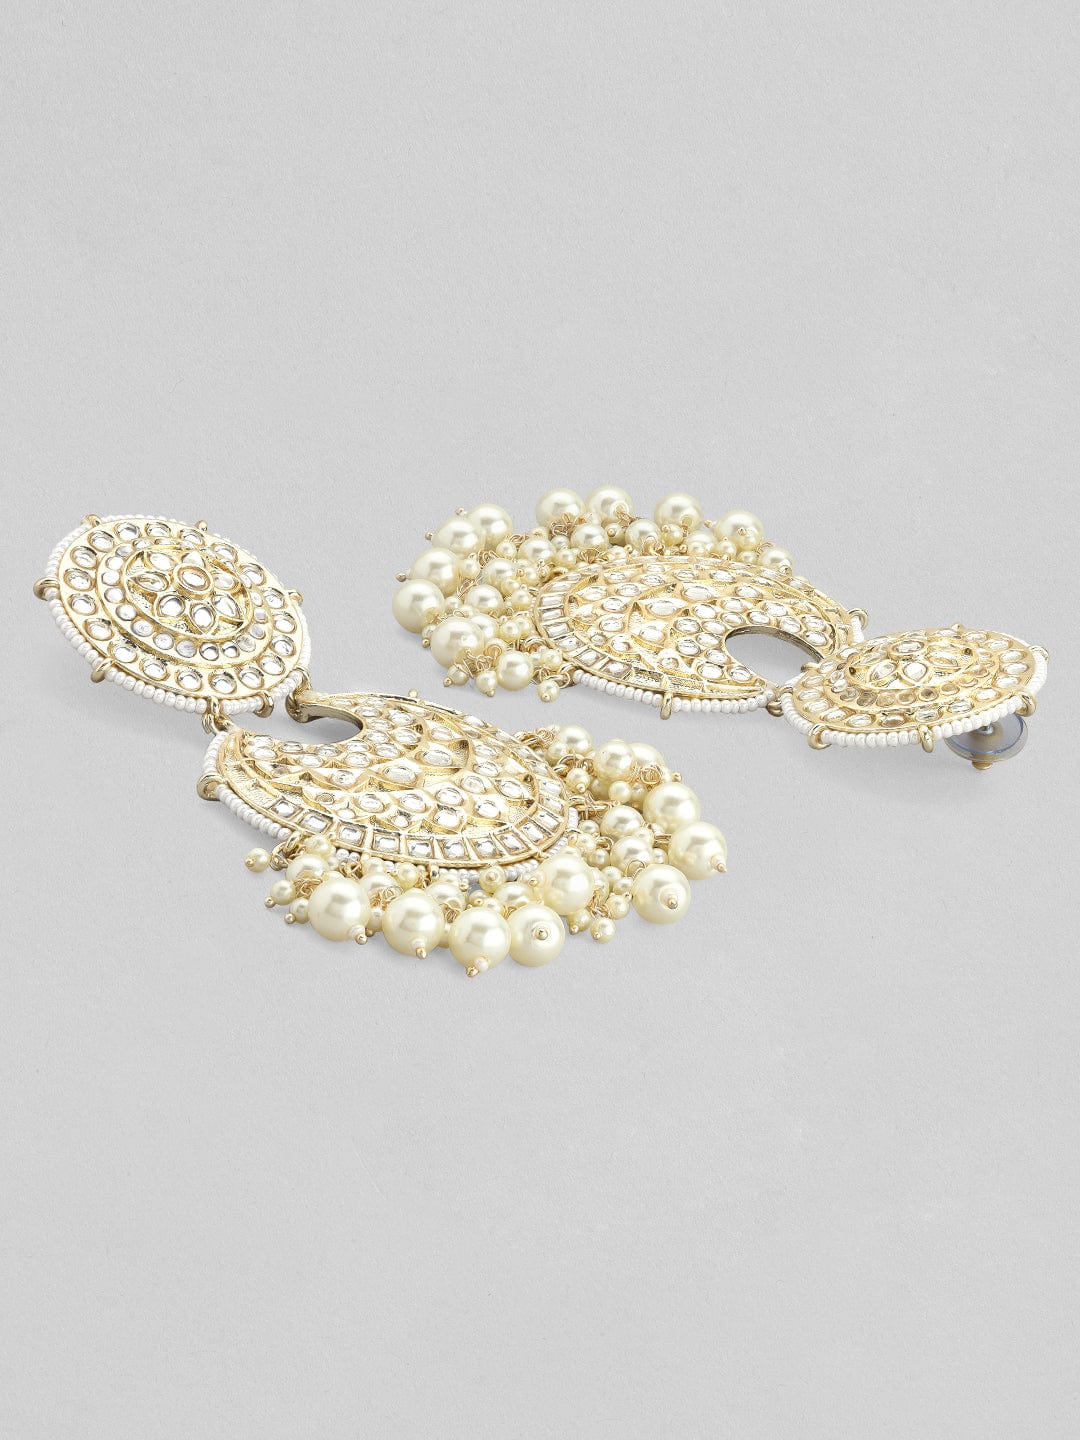 Beautiful Kundan Chandbali Earring for Lehenga | FashionCrab.com | Indian  jewelry sets, Chandbali earrings, Online earrings